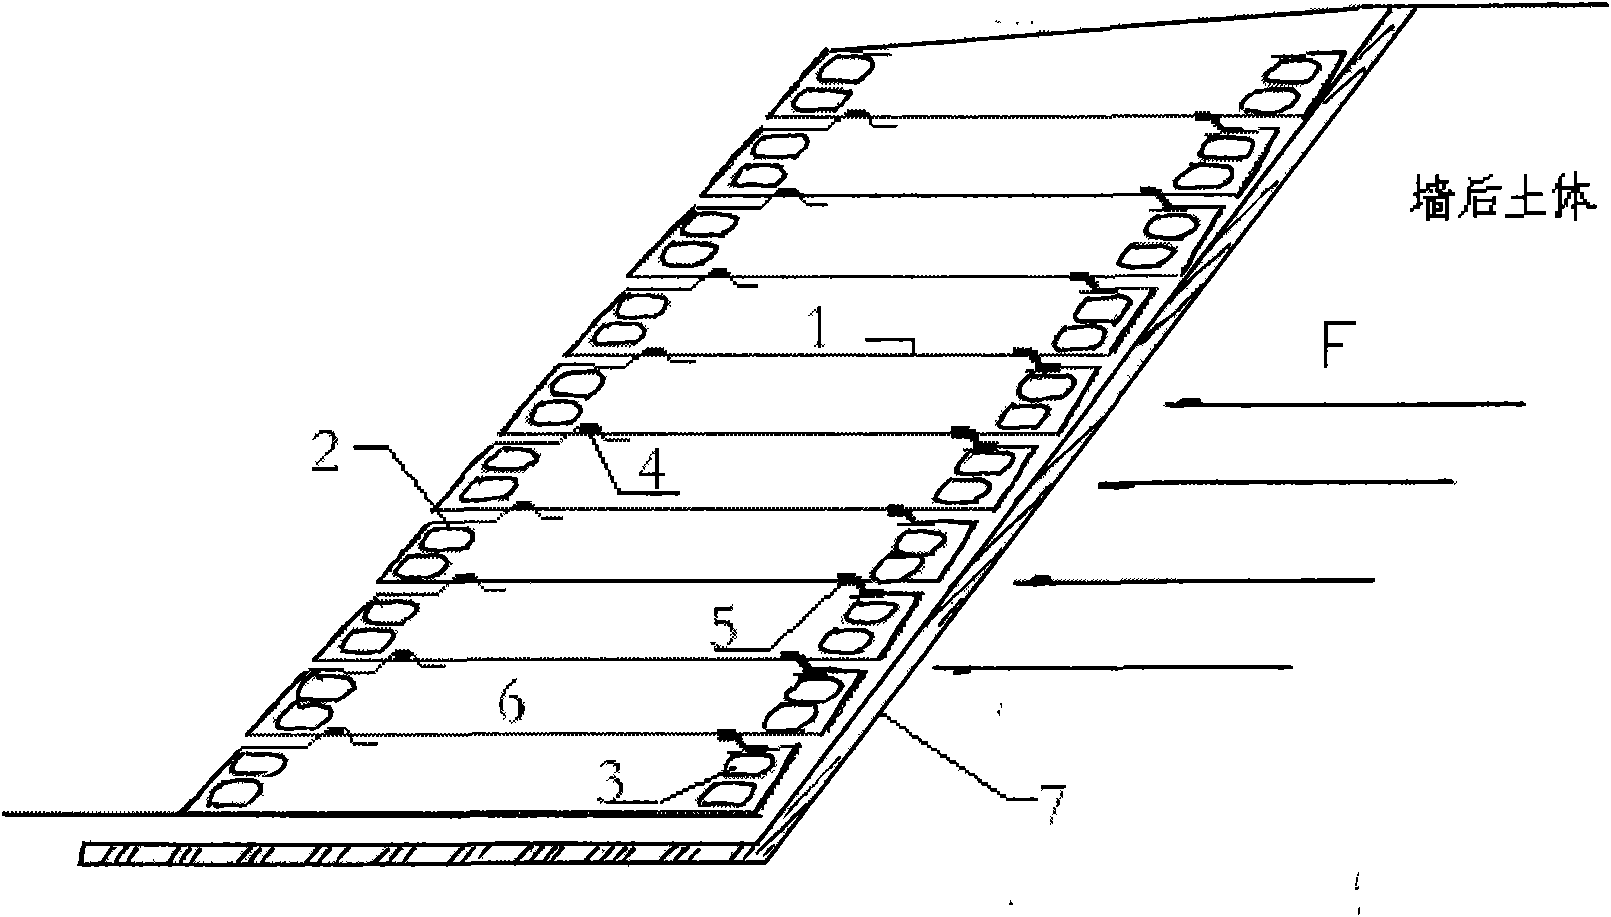 Reinforced core-enveloped structural slope protector